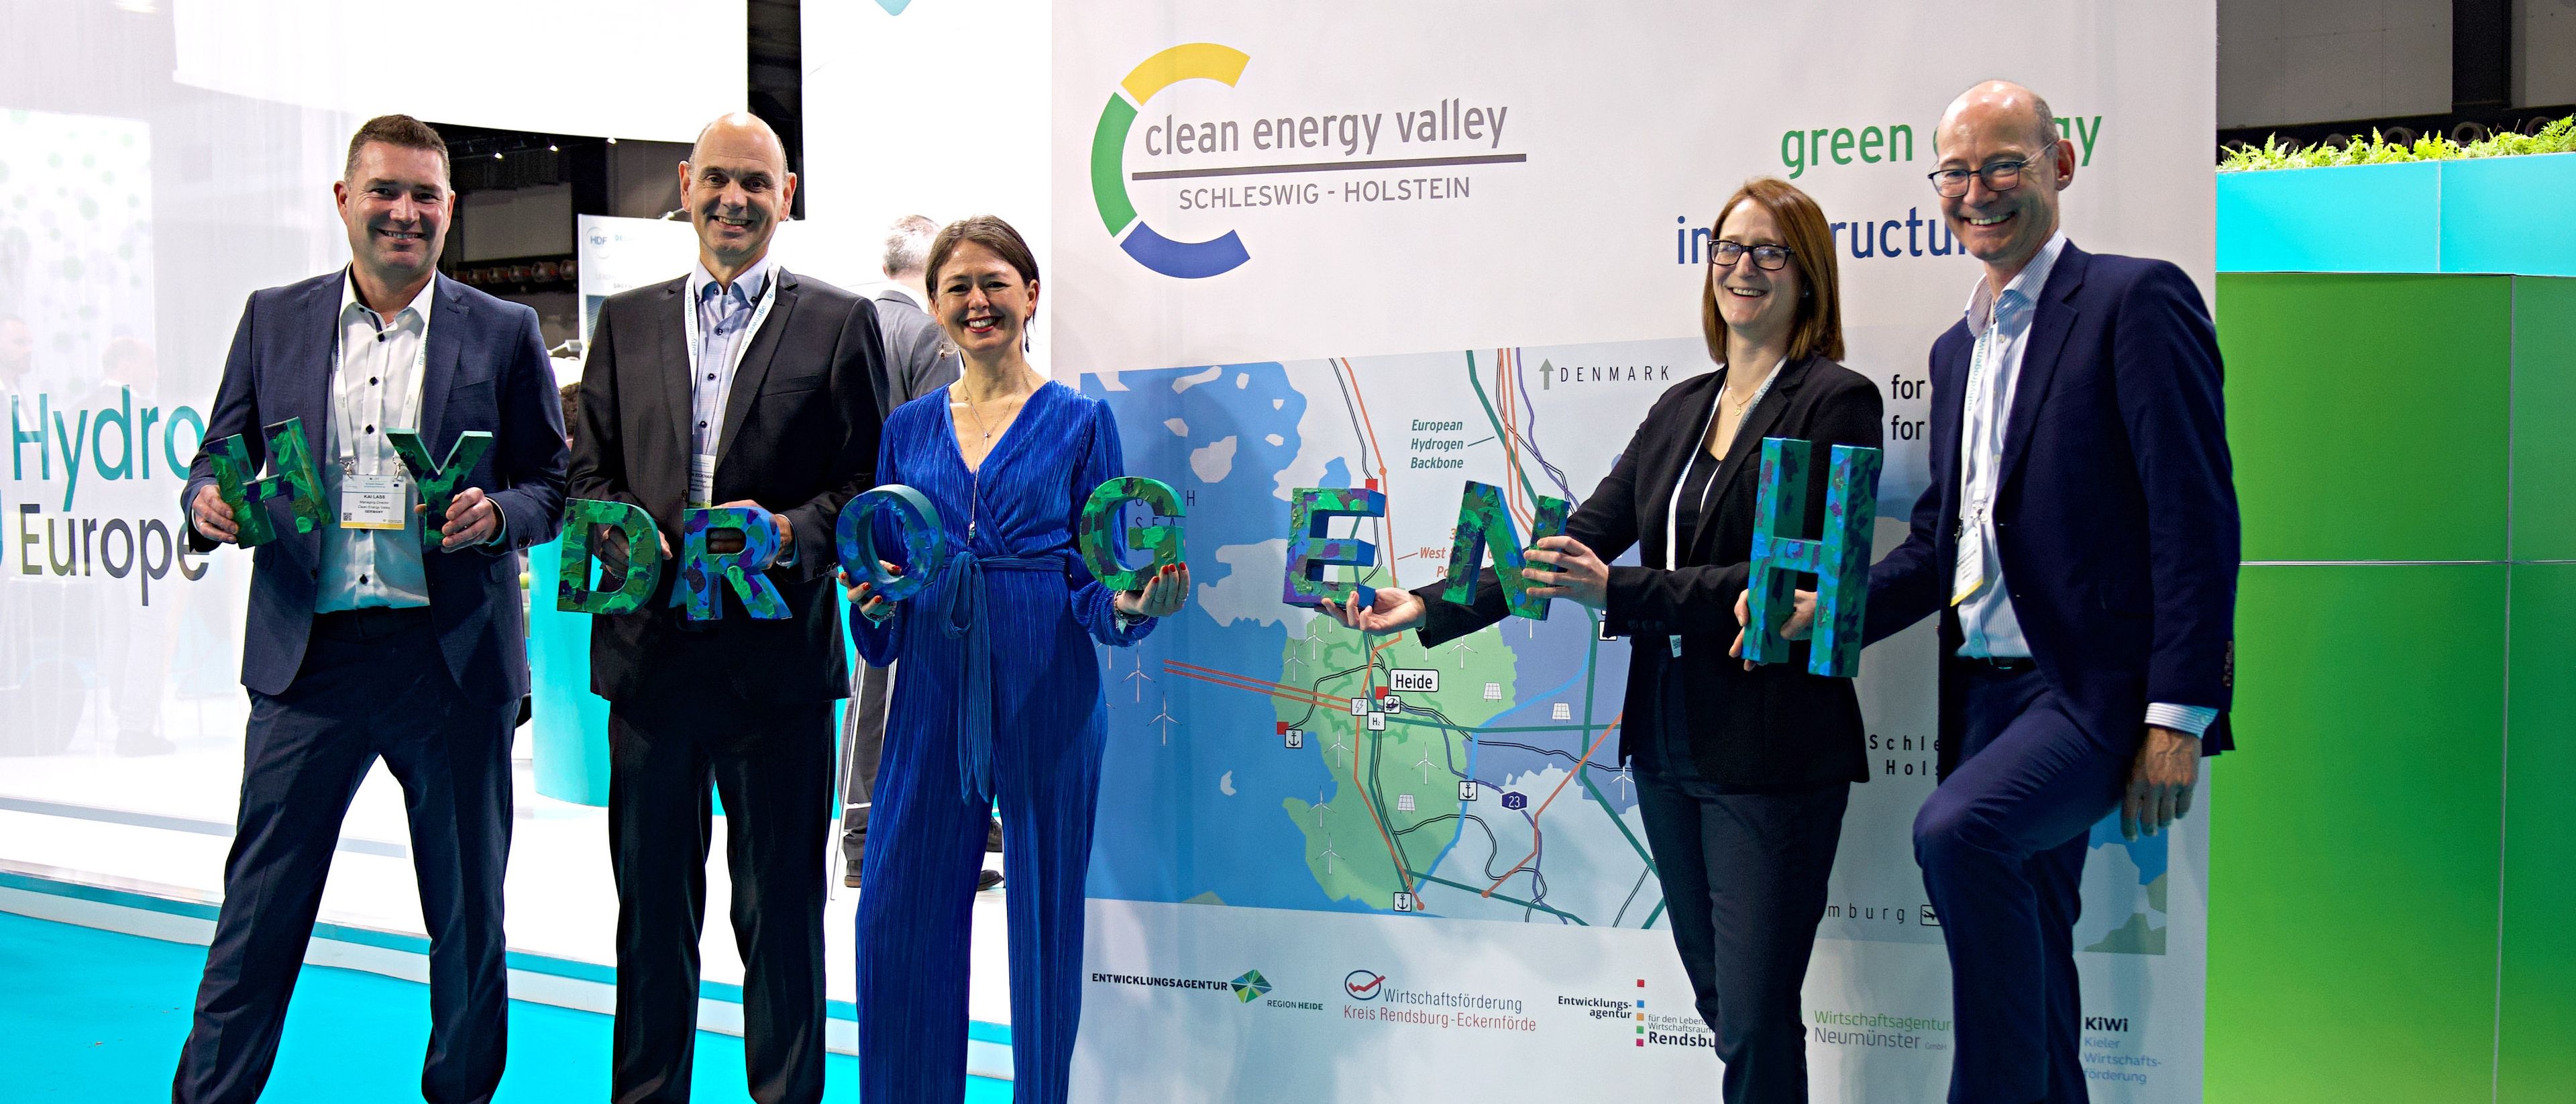 clean energy valley